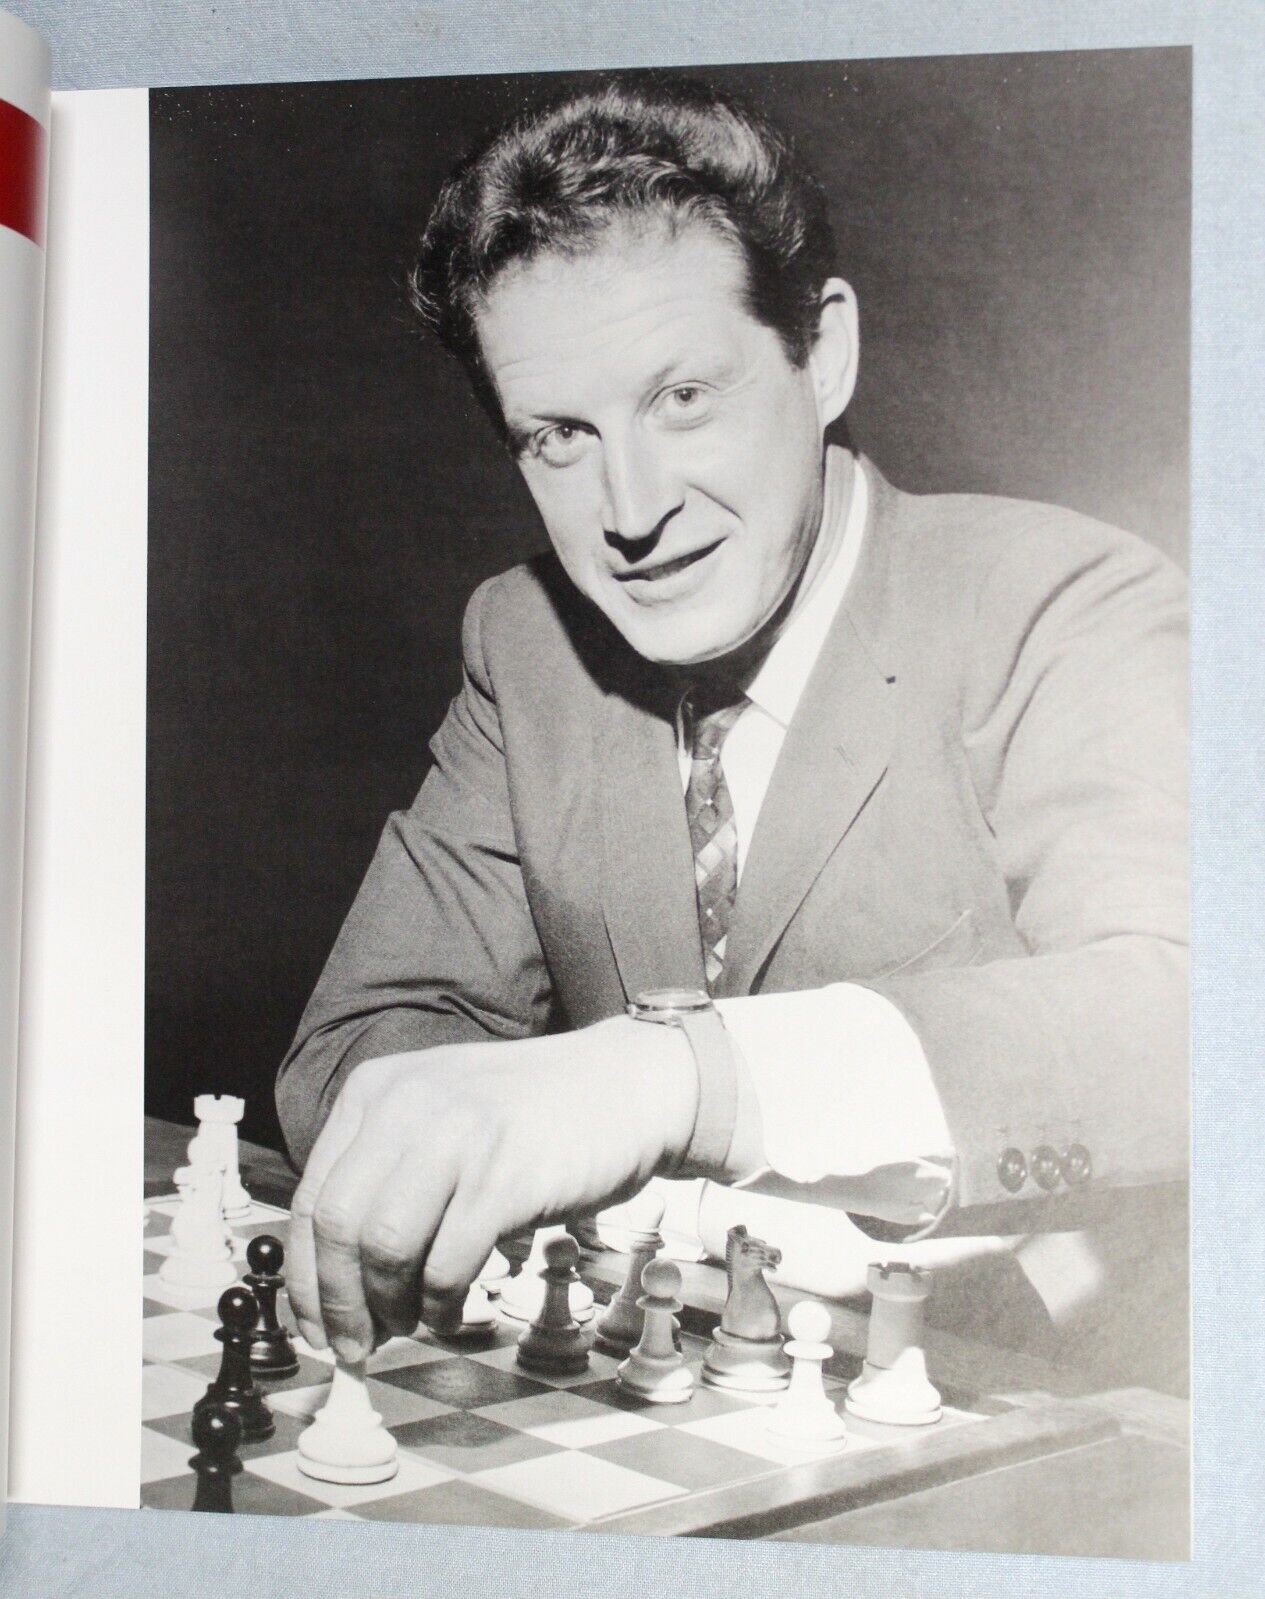 11159.Chess gift album: Yuri Lvovich Averbakh the oldest world grandmaster Moscow 2022